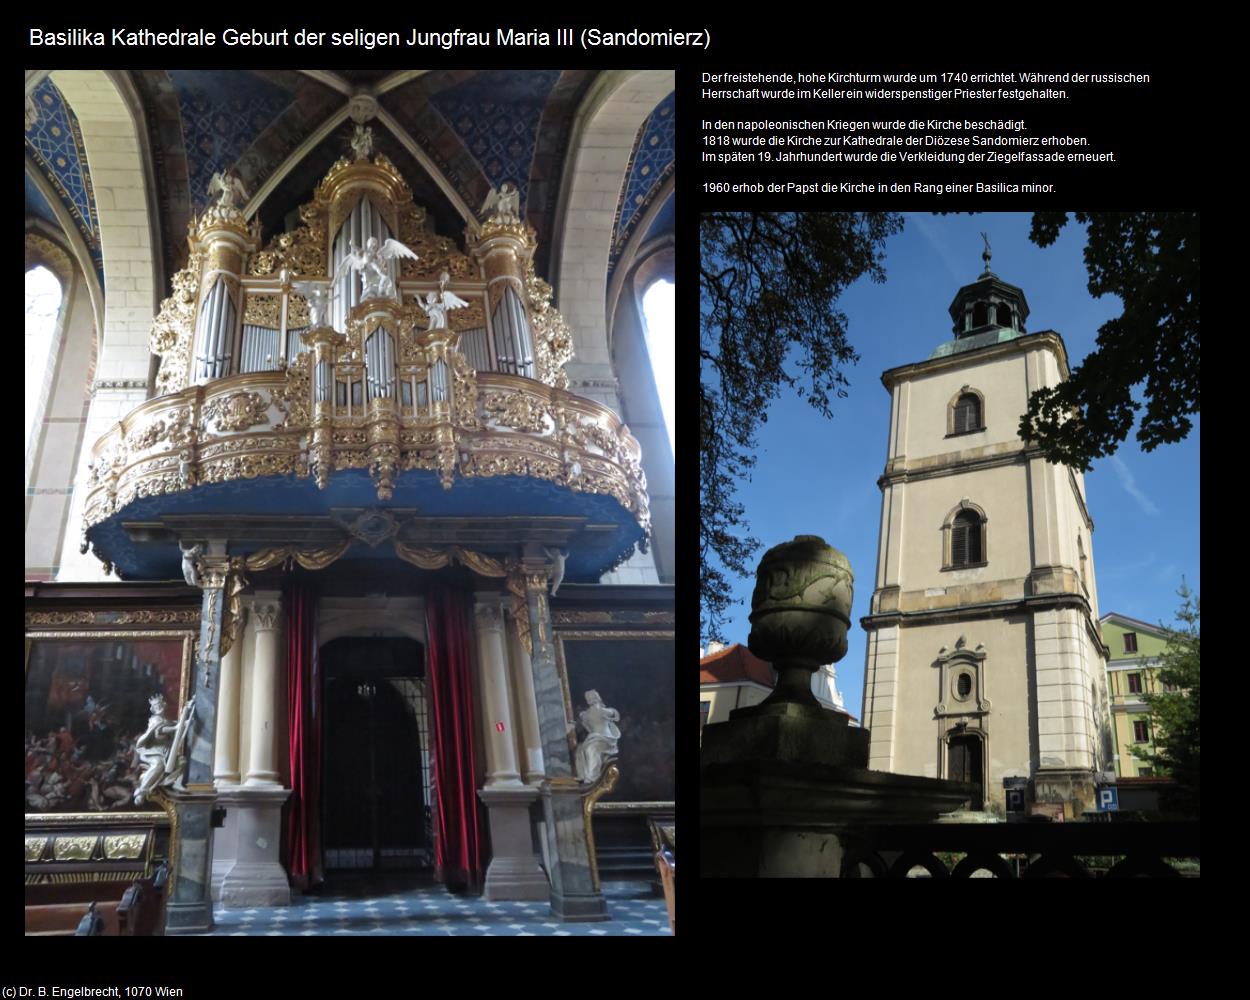 Basilika Kathedrale Geburt der seligen Jungfrau Maria III (Sandomierz) in POLEN-Galizien